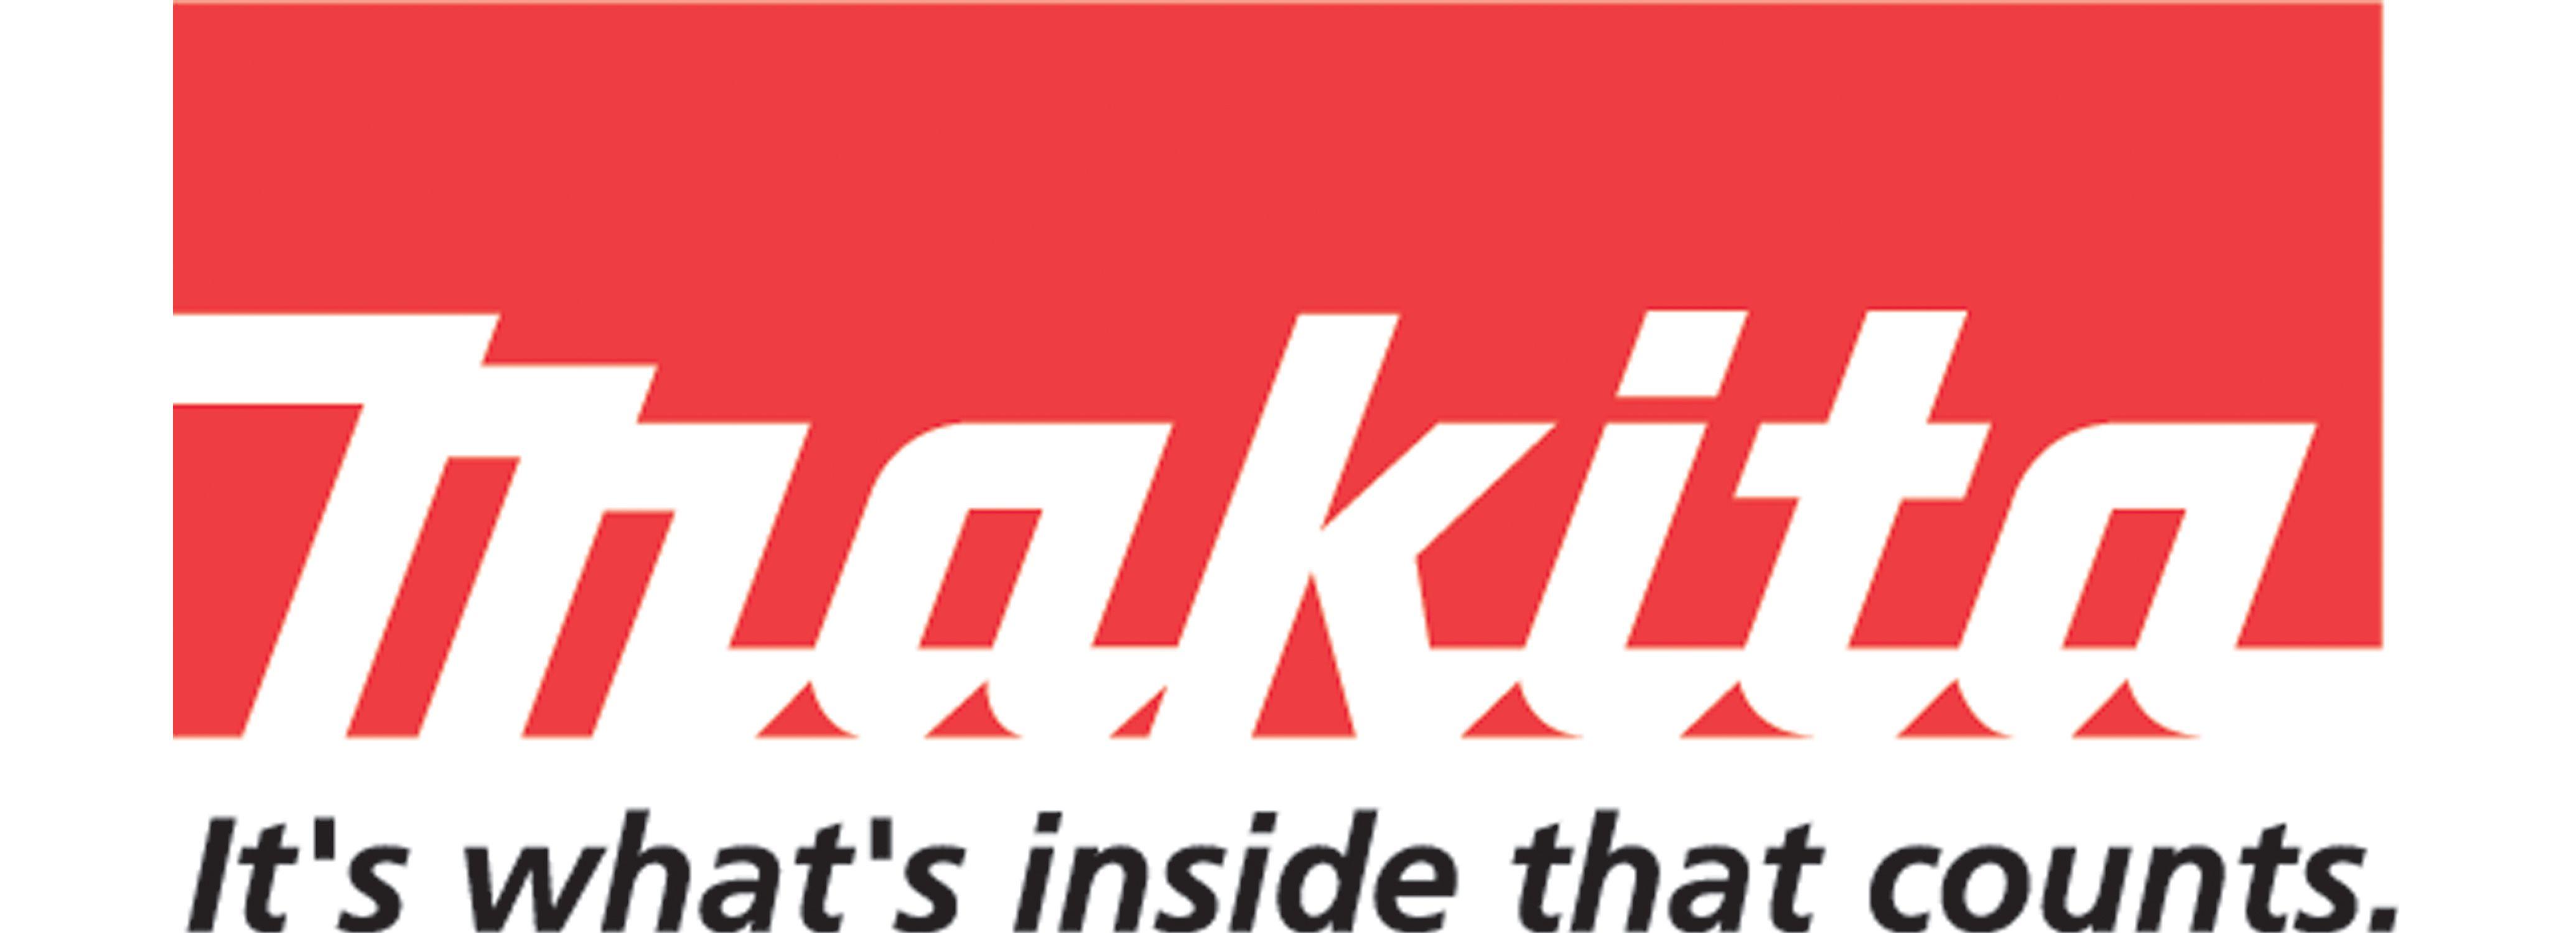 Makita Logo - Makita Logos